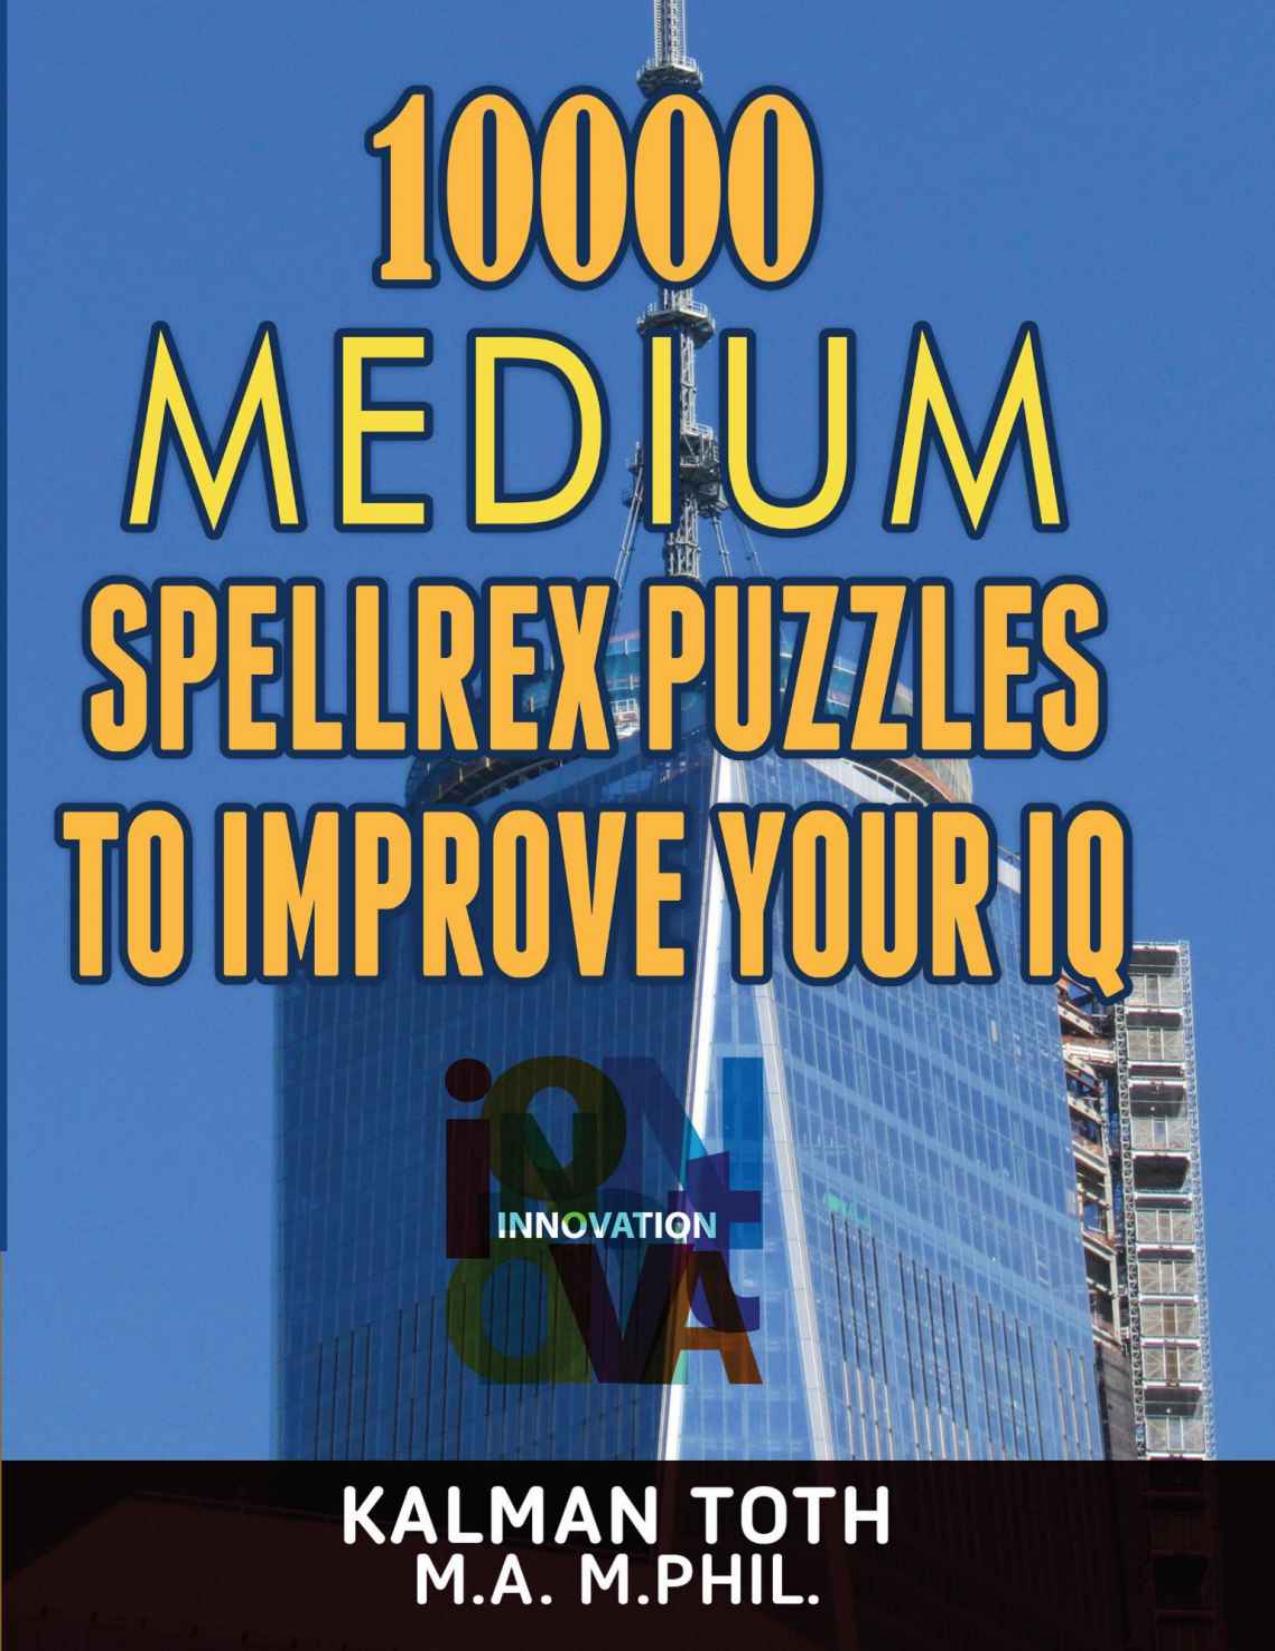 10000 Medium Spellrex Puzzles to Improve Your IQ by Kalman Toth M.A. M.PHIL